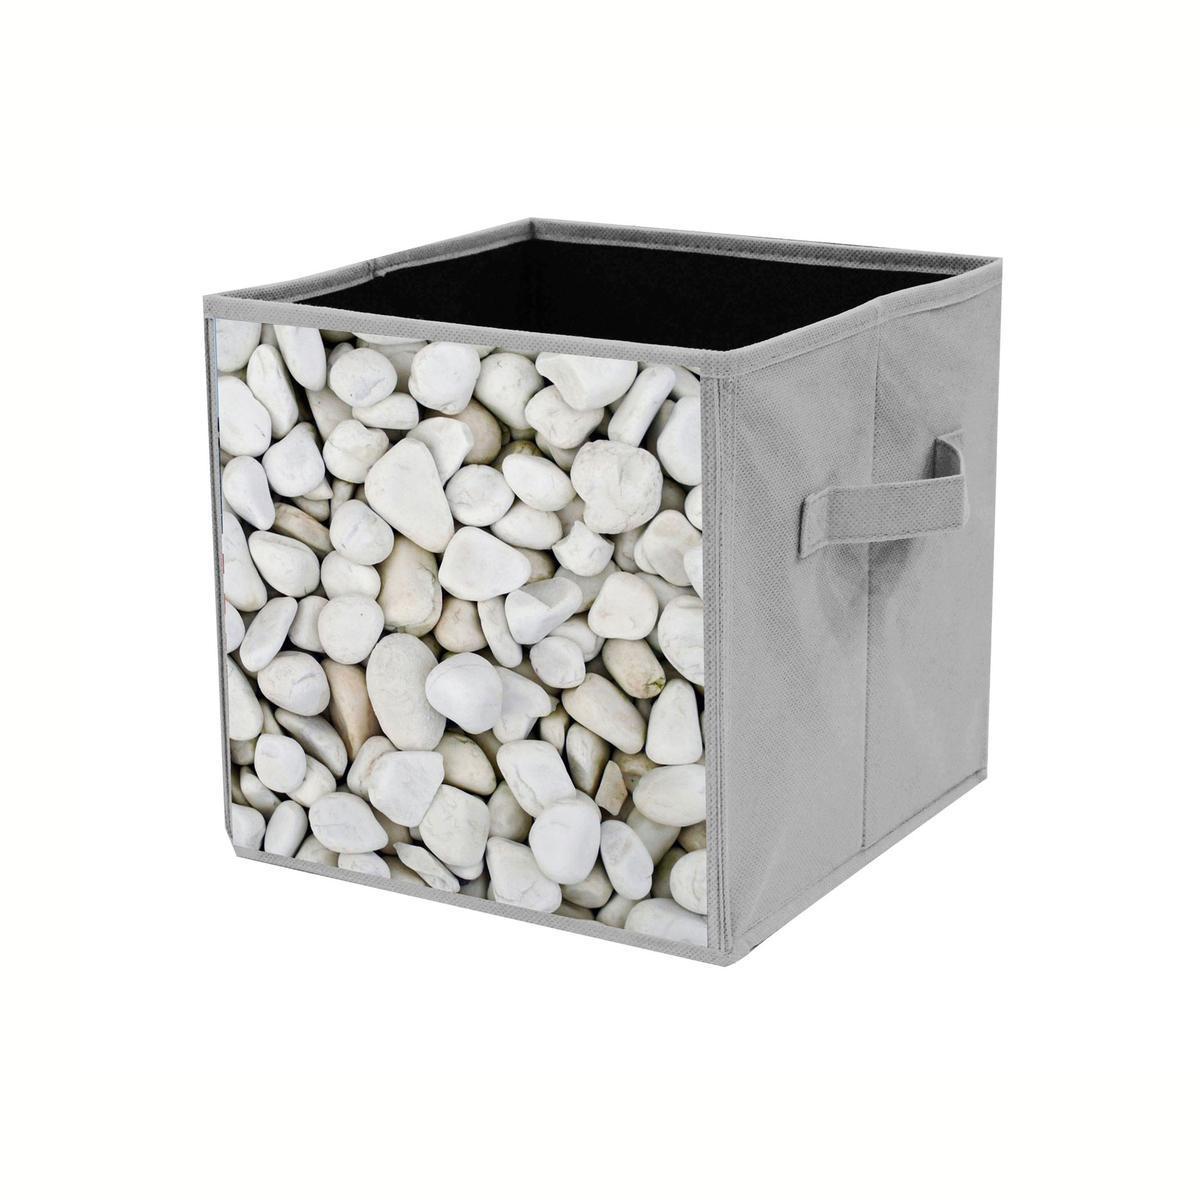 Cube de rangement - Tissu non tissé - 31 x 31 x 31 cm - Multicolore